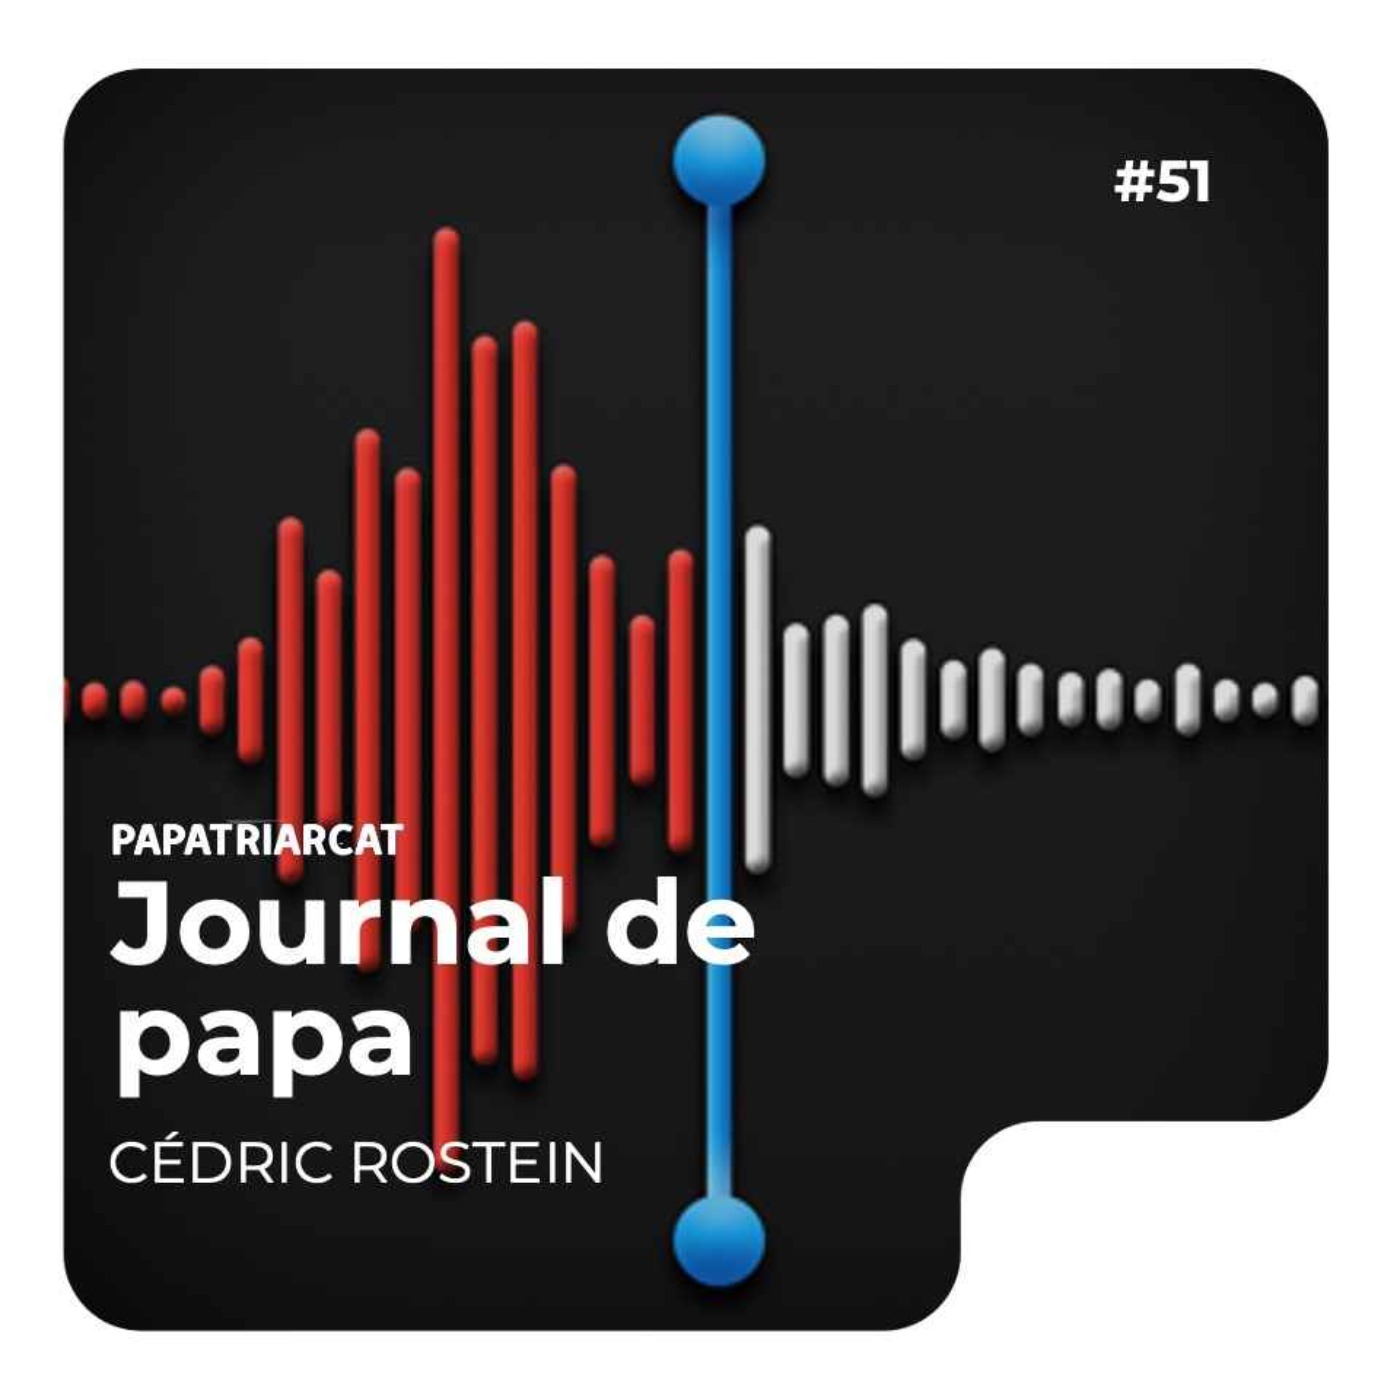 Journal de papa #51